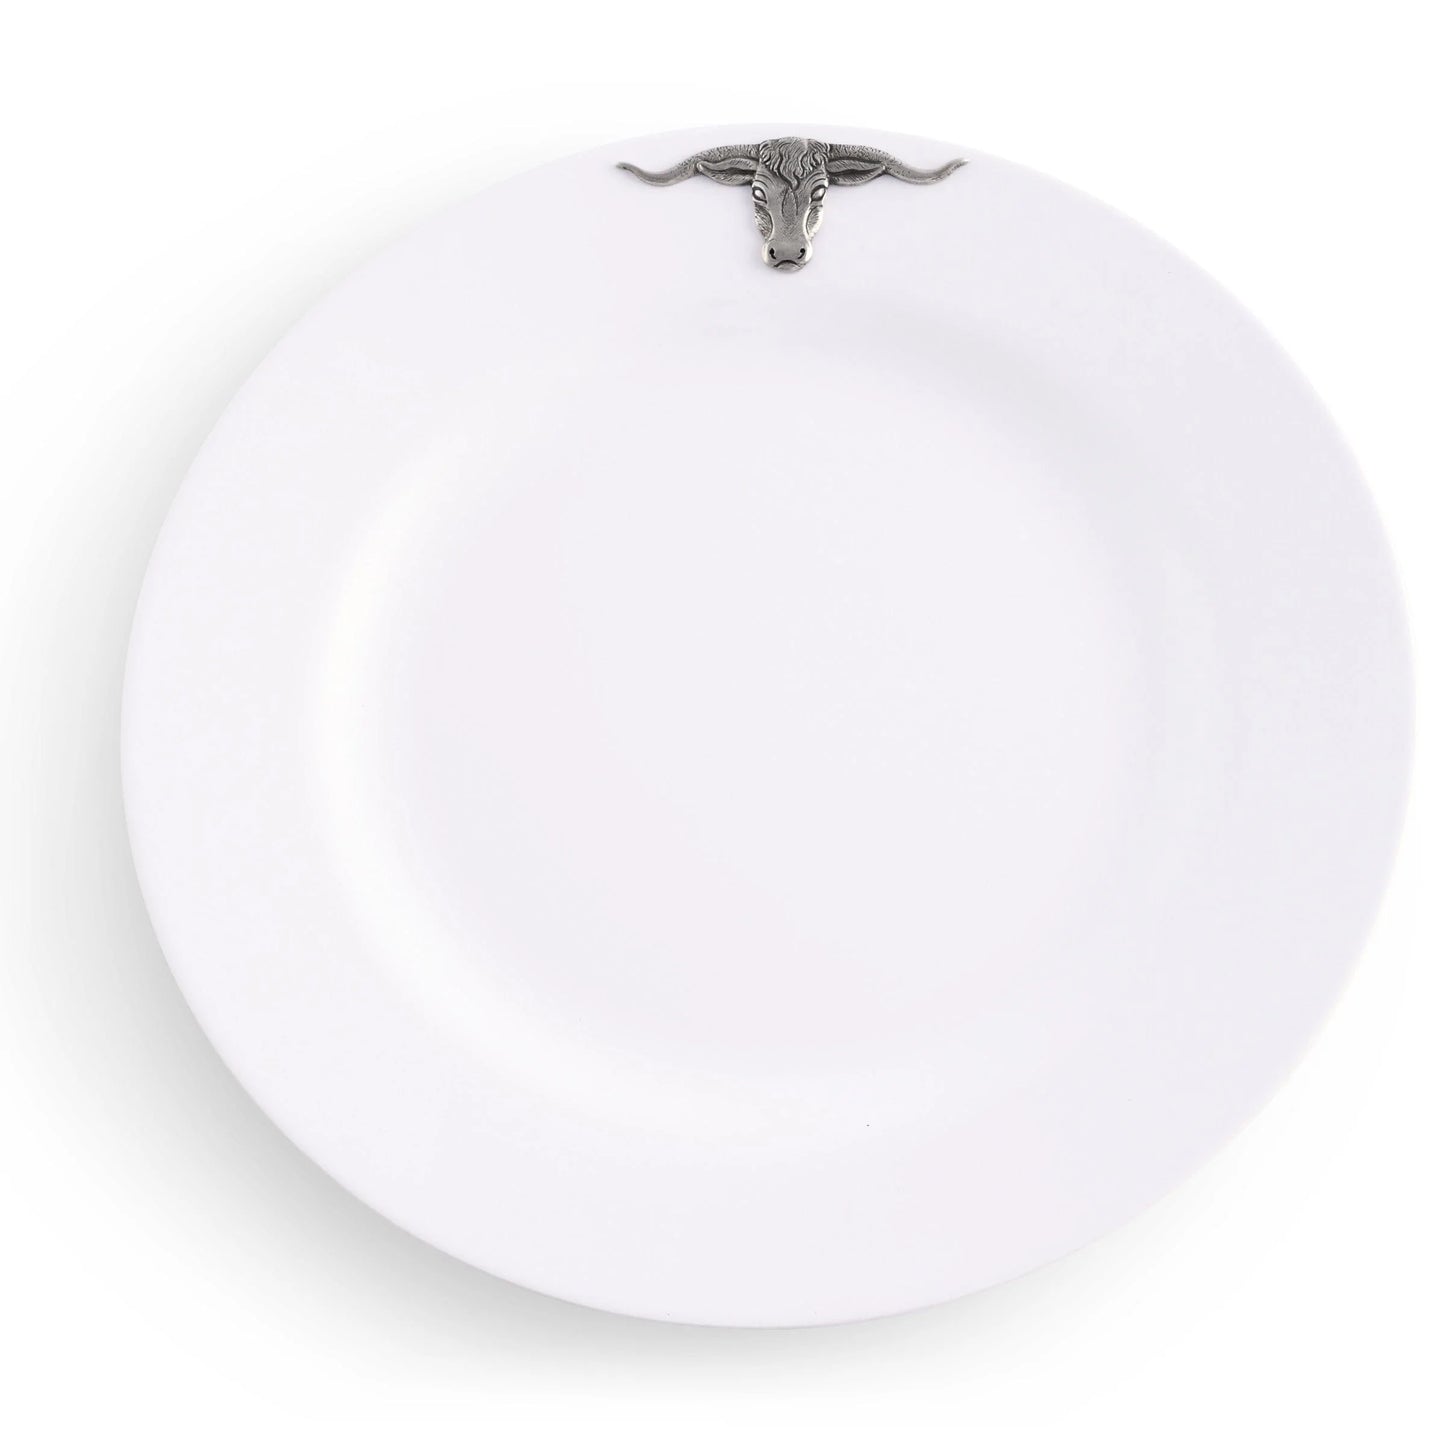 Longhorn Melamine Lunch Plates (Set of 4)